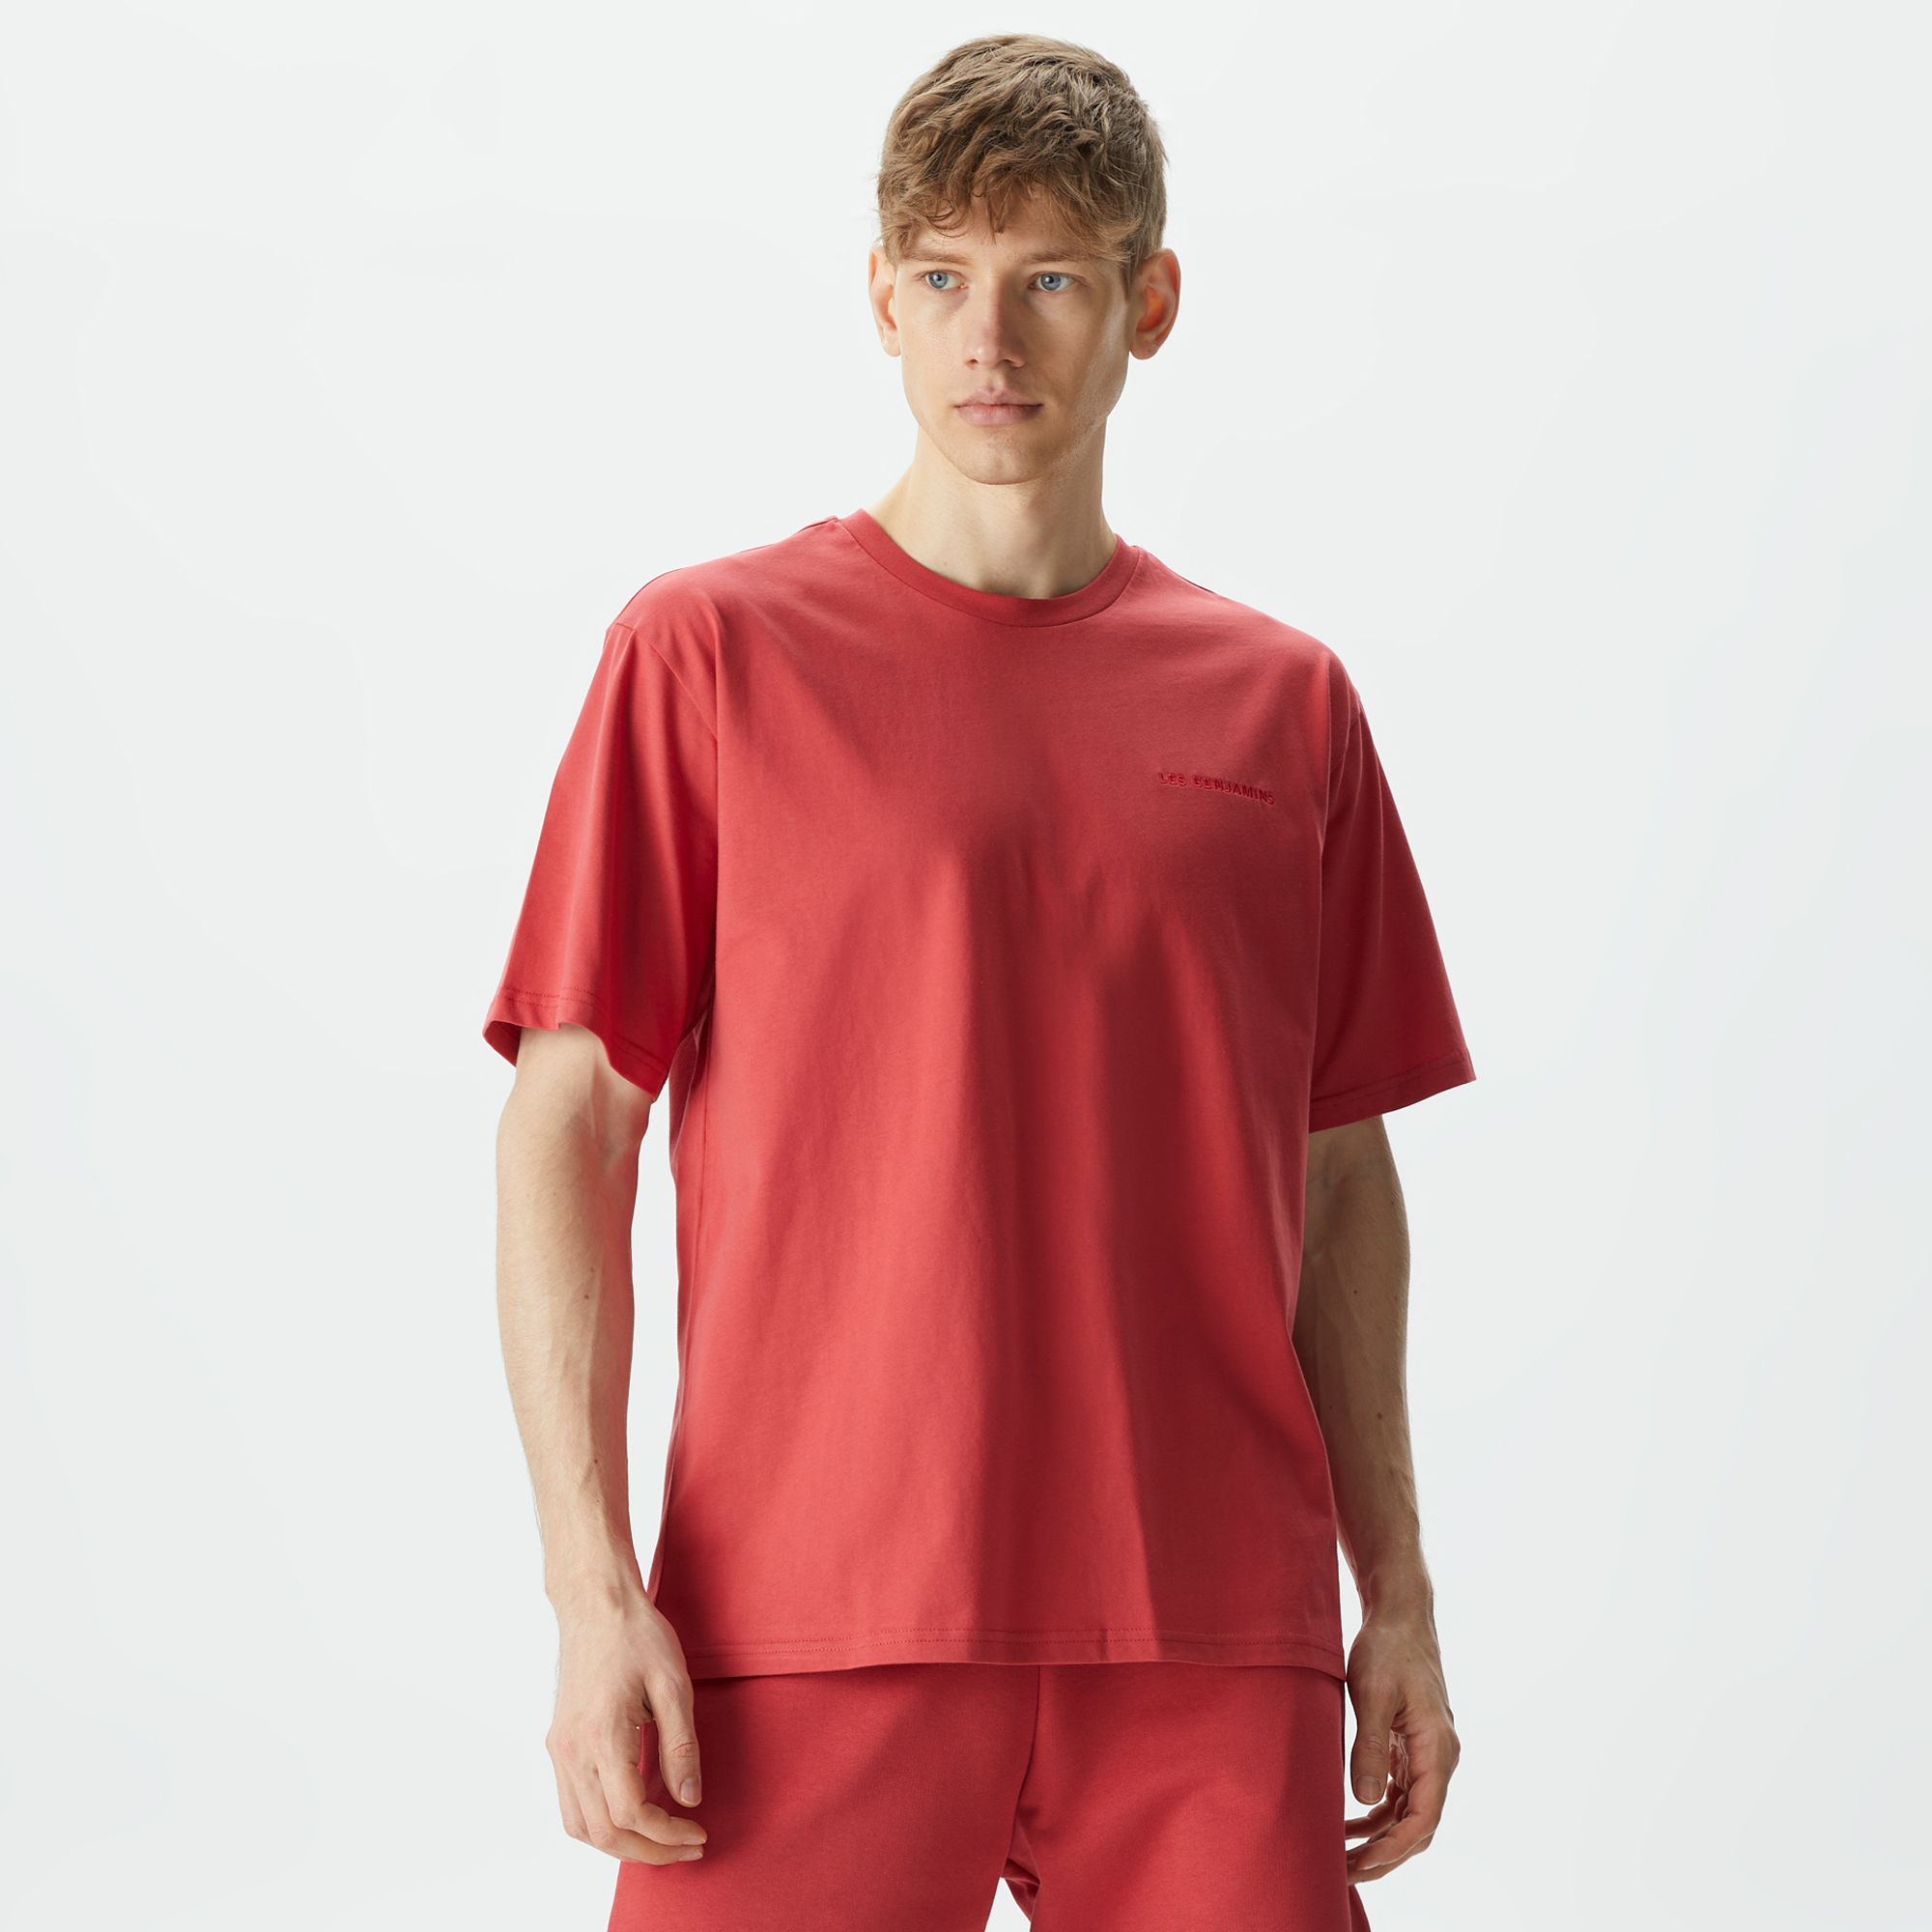 Les Benjamins Essential 304 Erkek Kırmızı T-Shirt